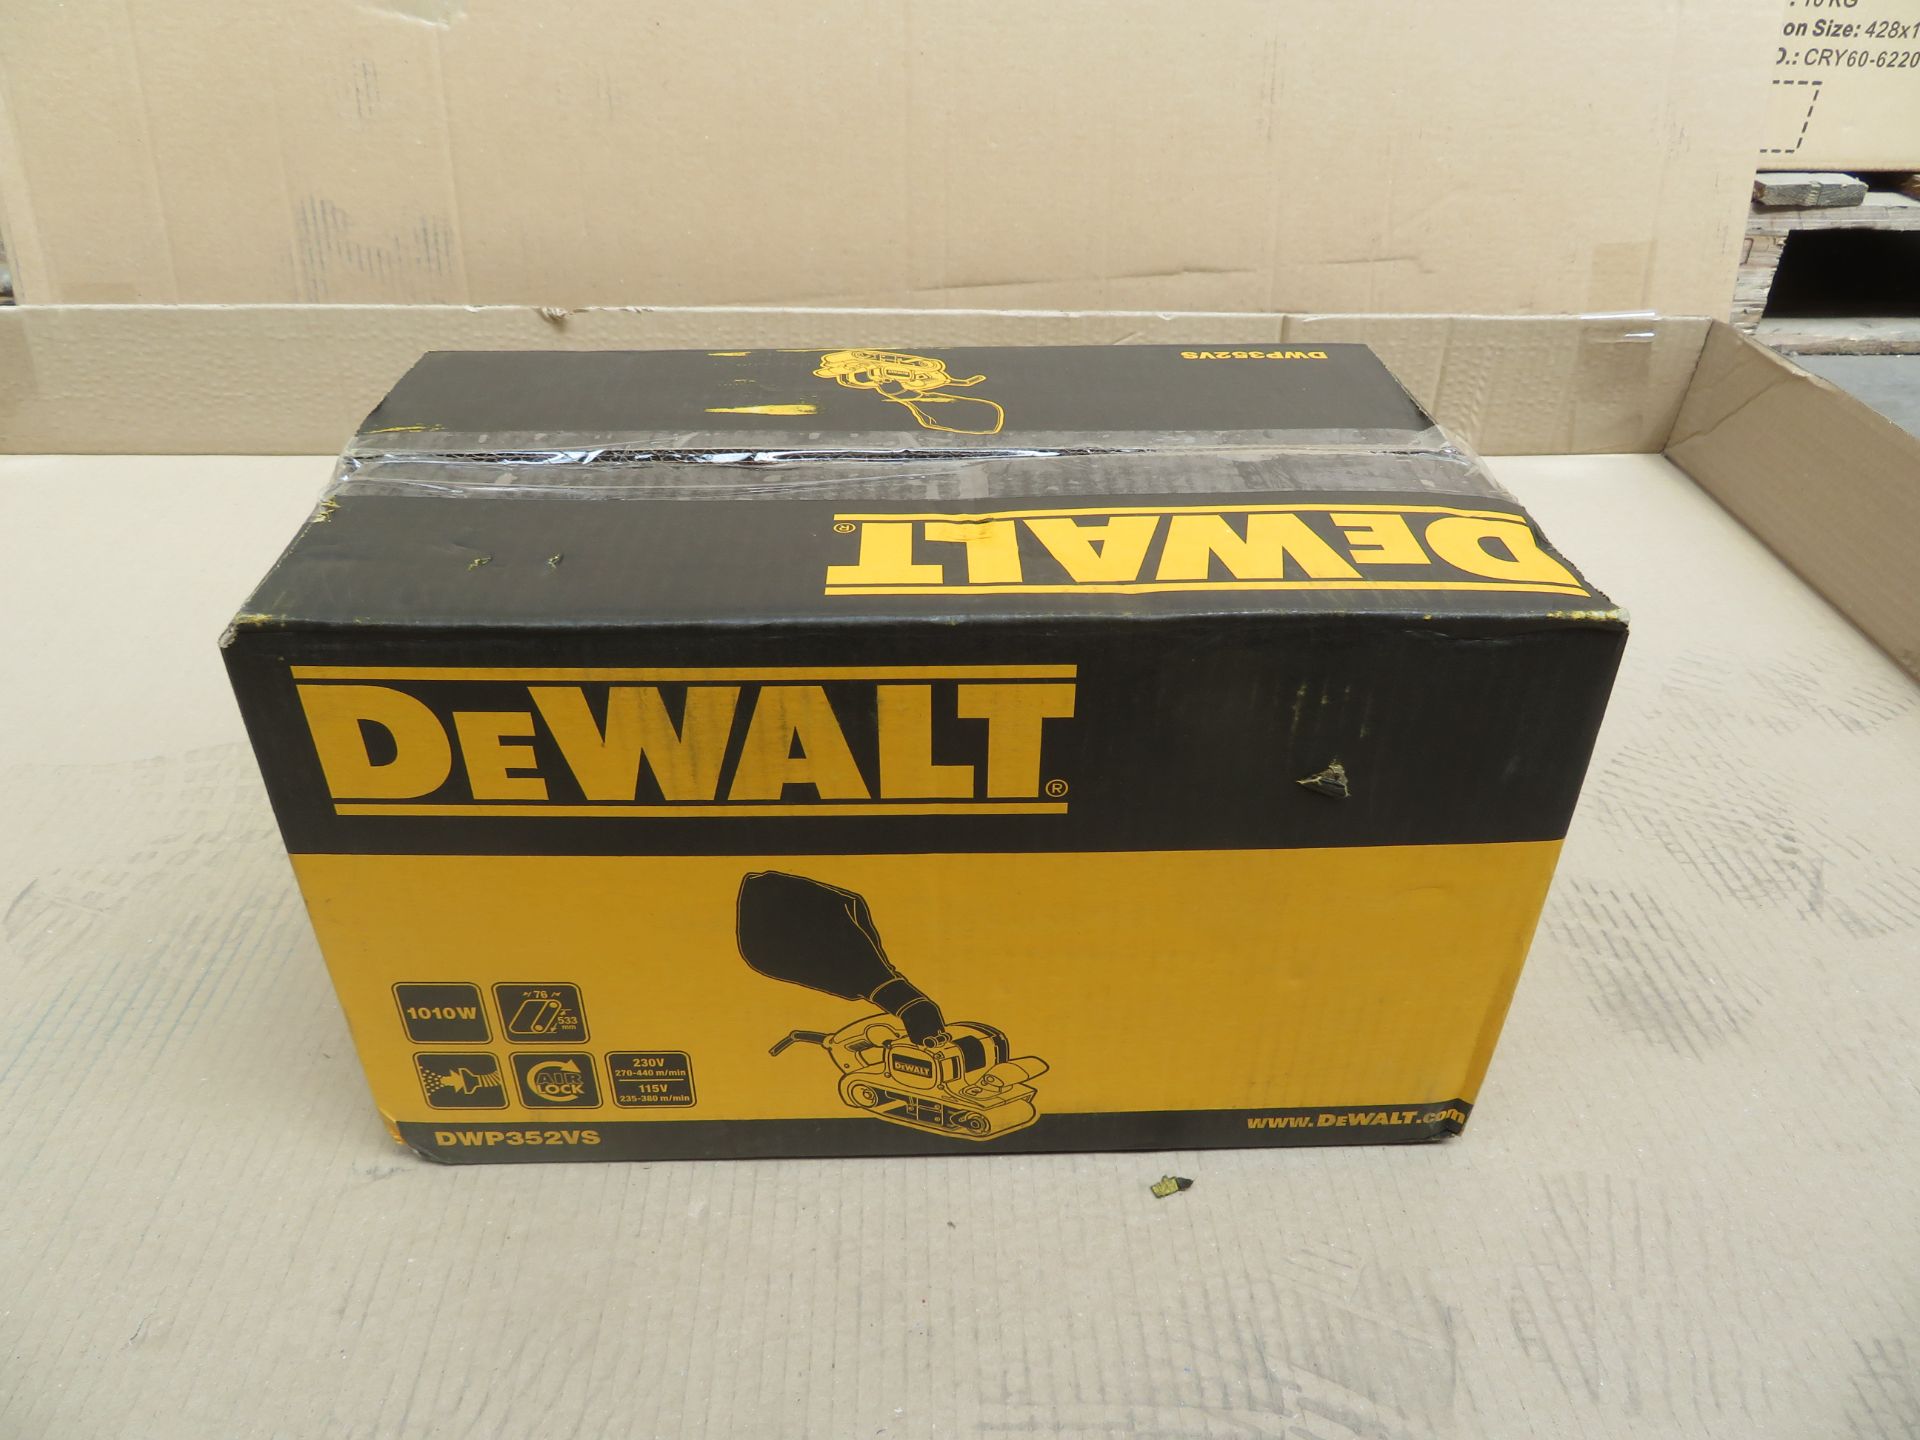 (A17) Dewalt Dwp352Vs-Gb 3" Belt Sander 240V - New Condition, Slightly Tatty Box. - Image 2 of 5